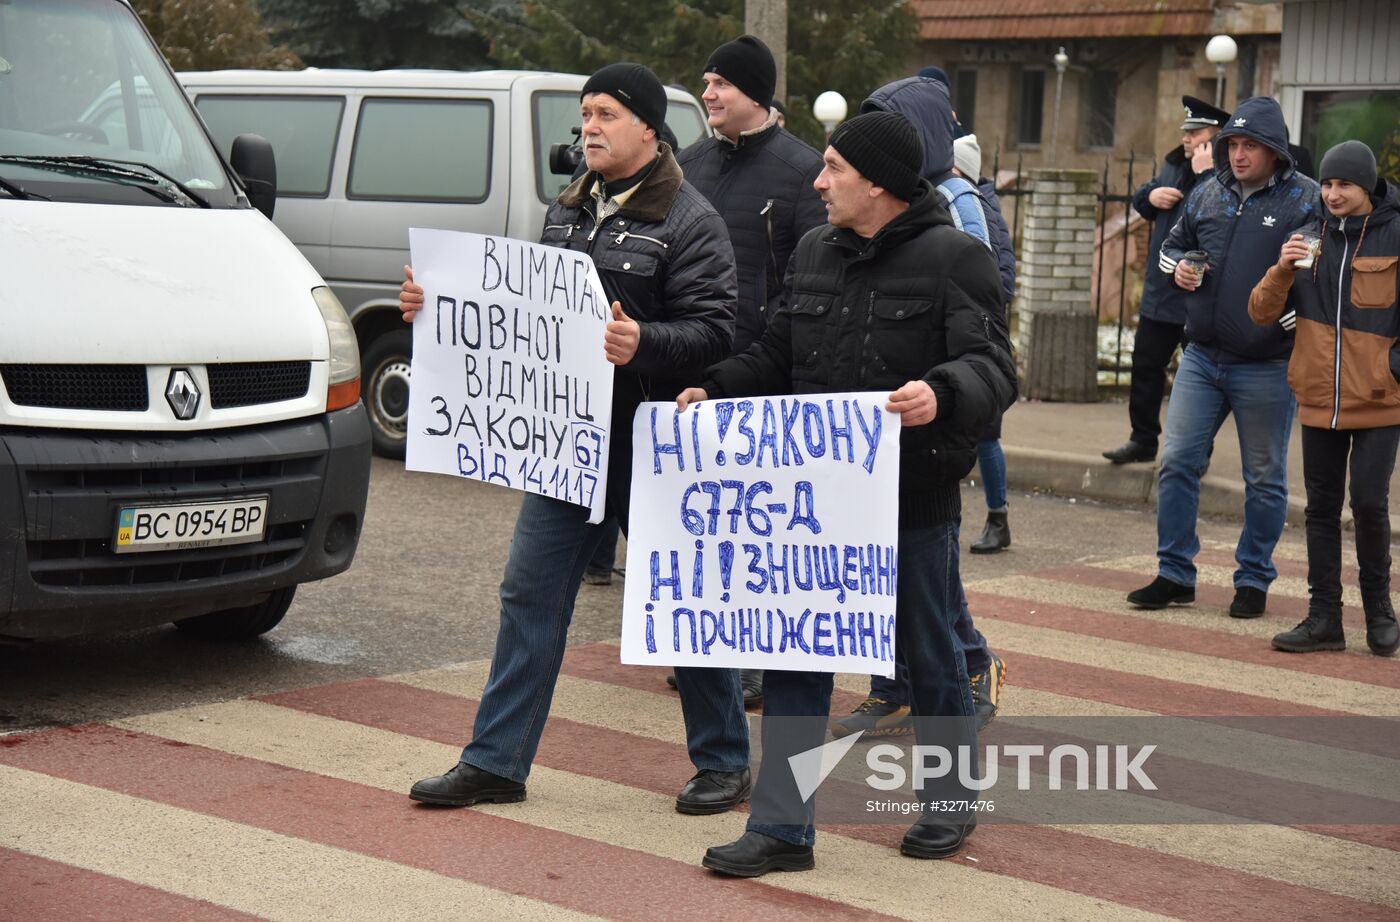 Protest at Ukraine-Poland border